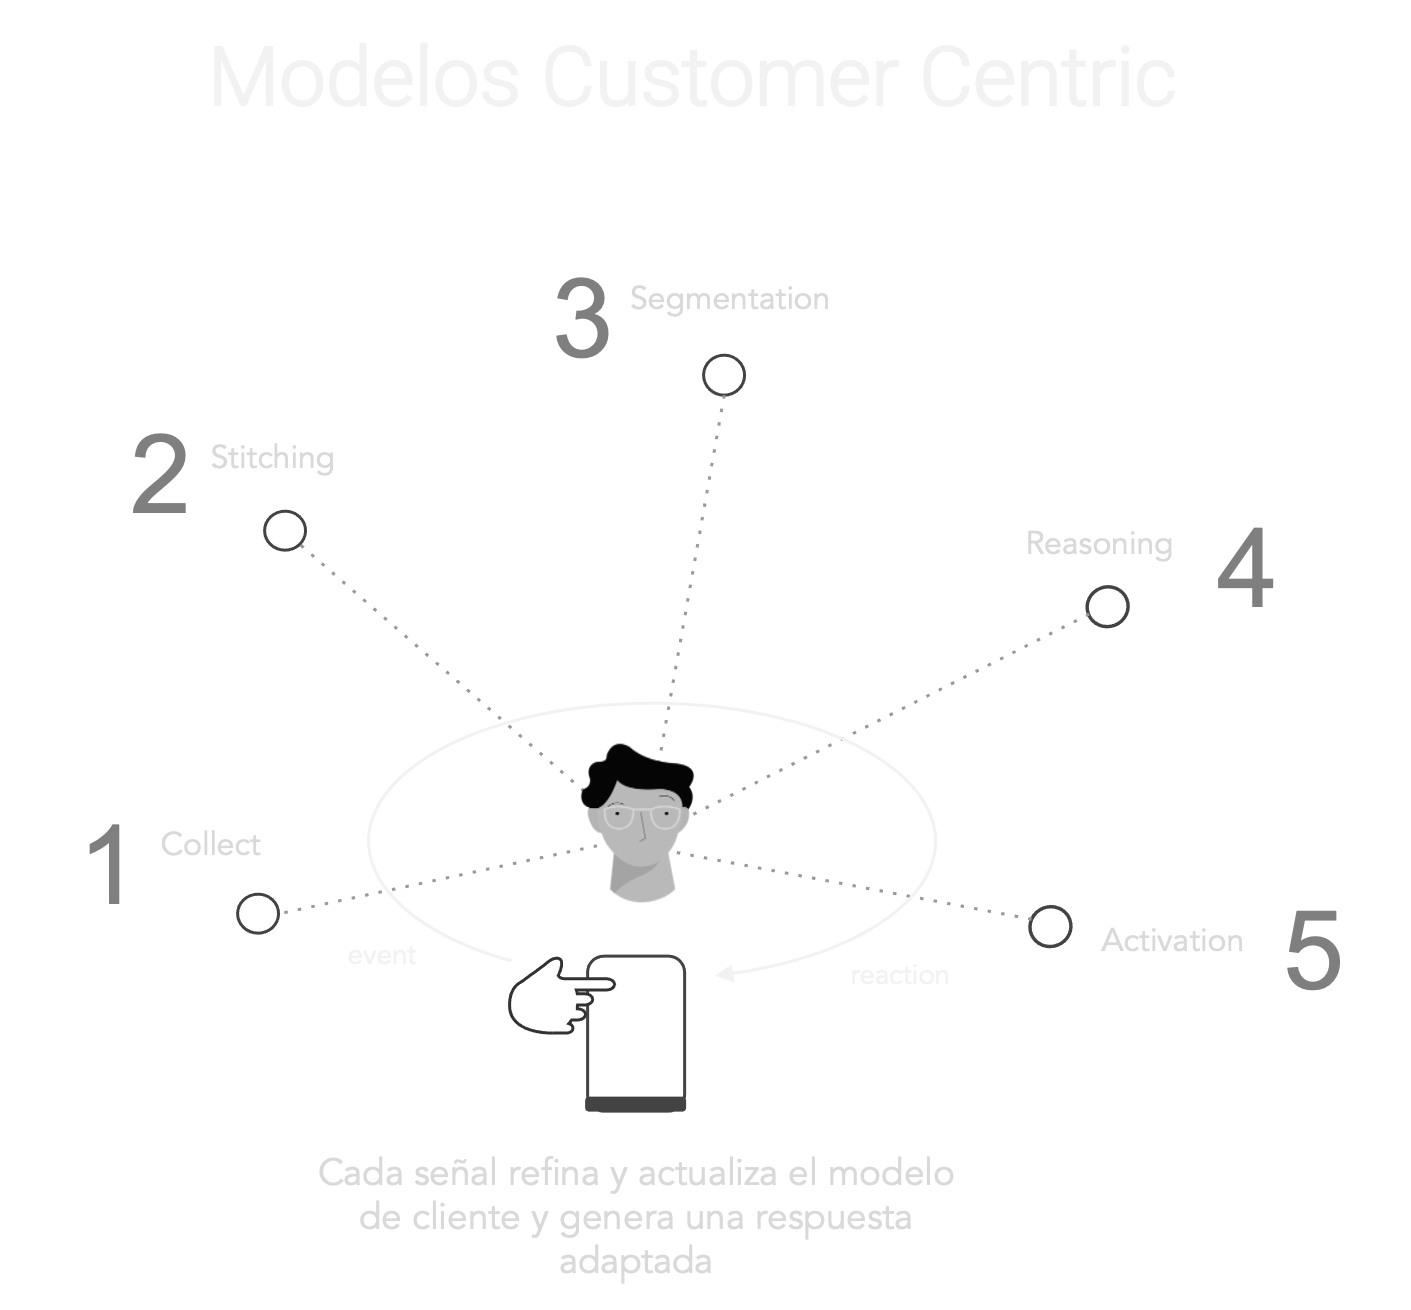 Modelos Customer Centric